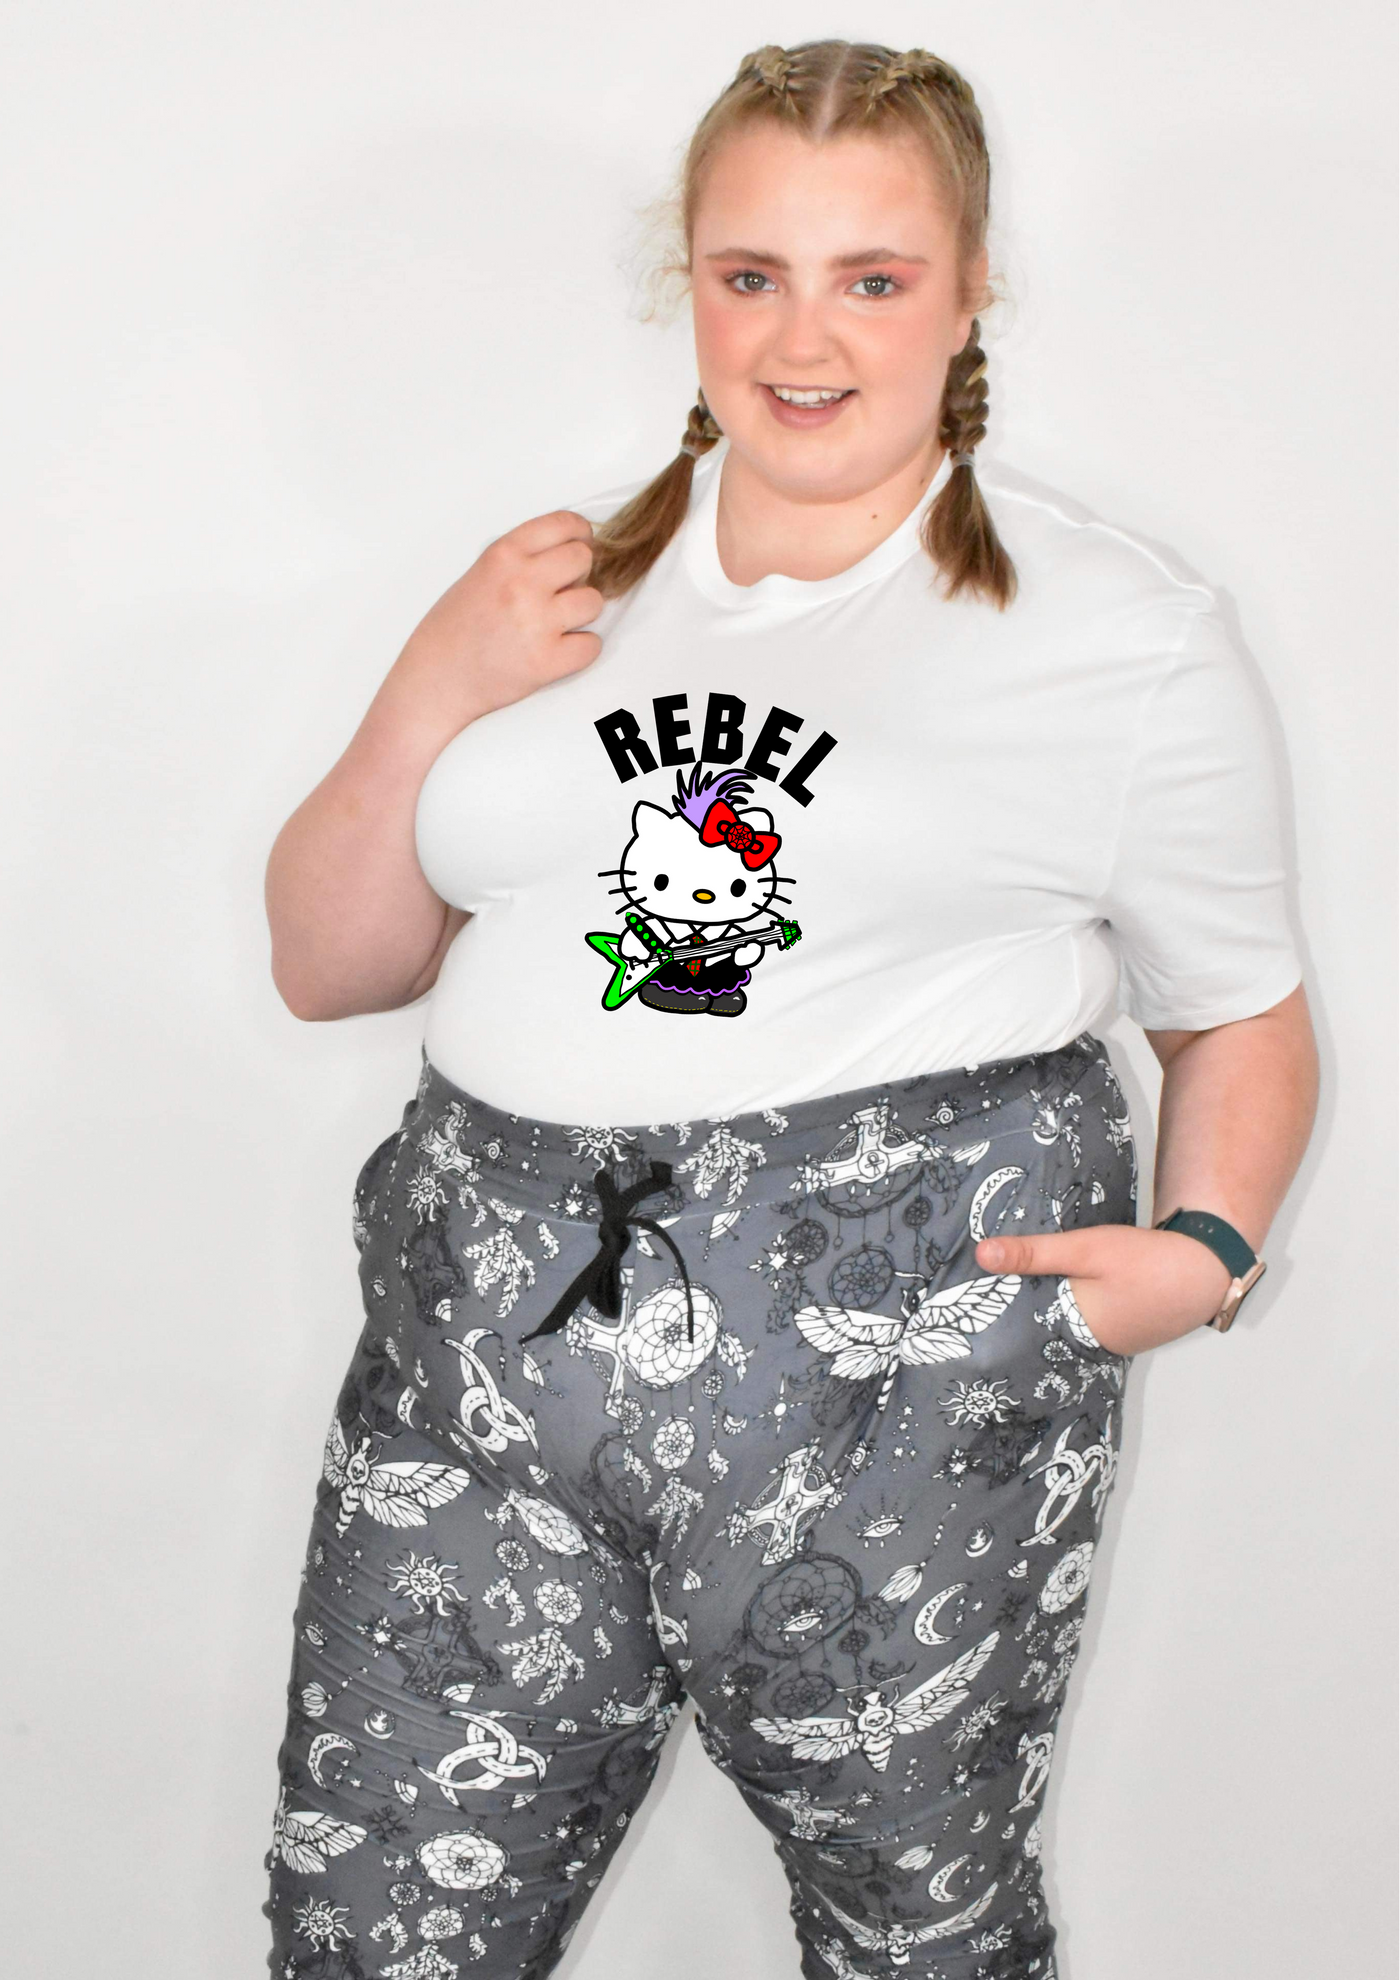 "Rebel” Kitty Unisex Organic T-Shirt